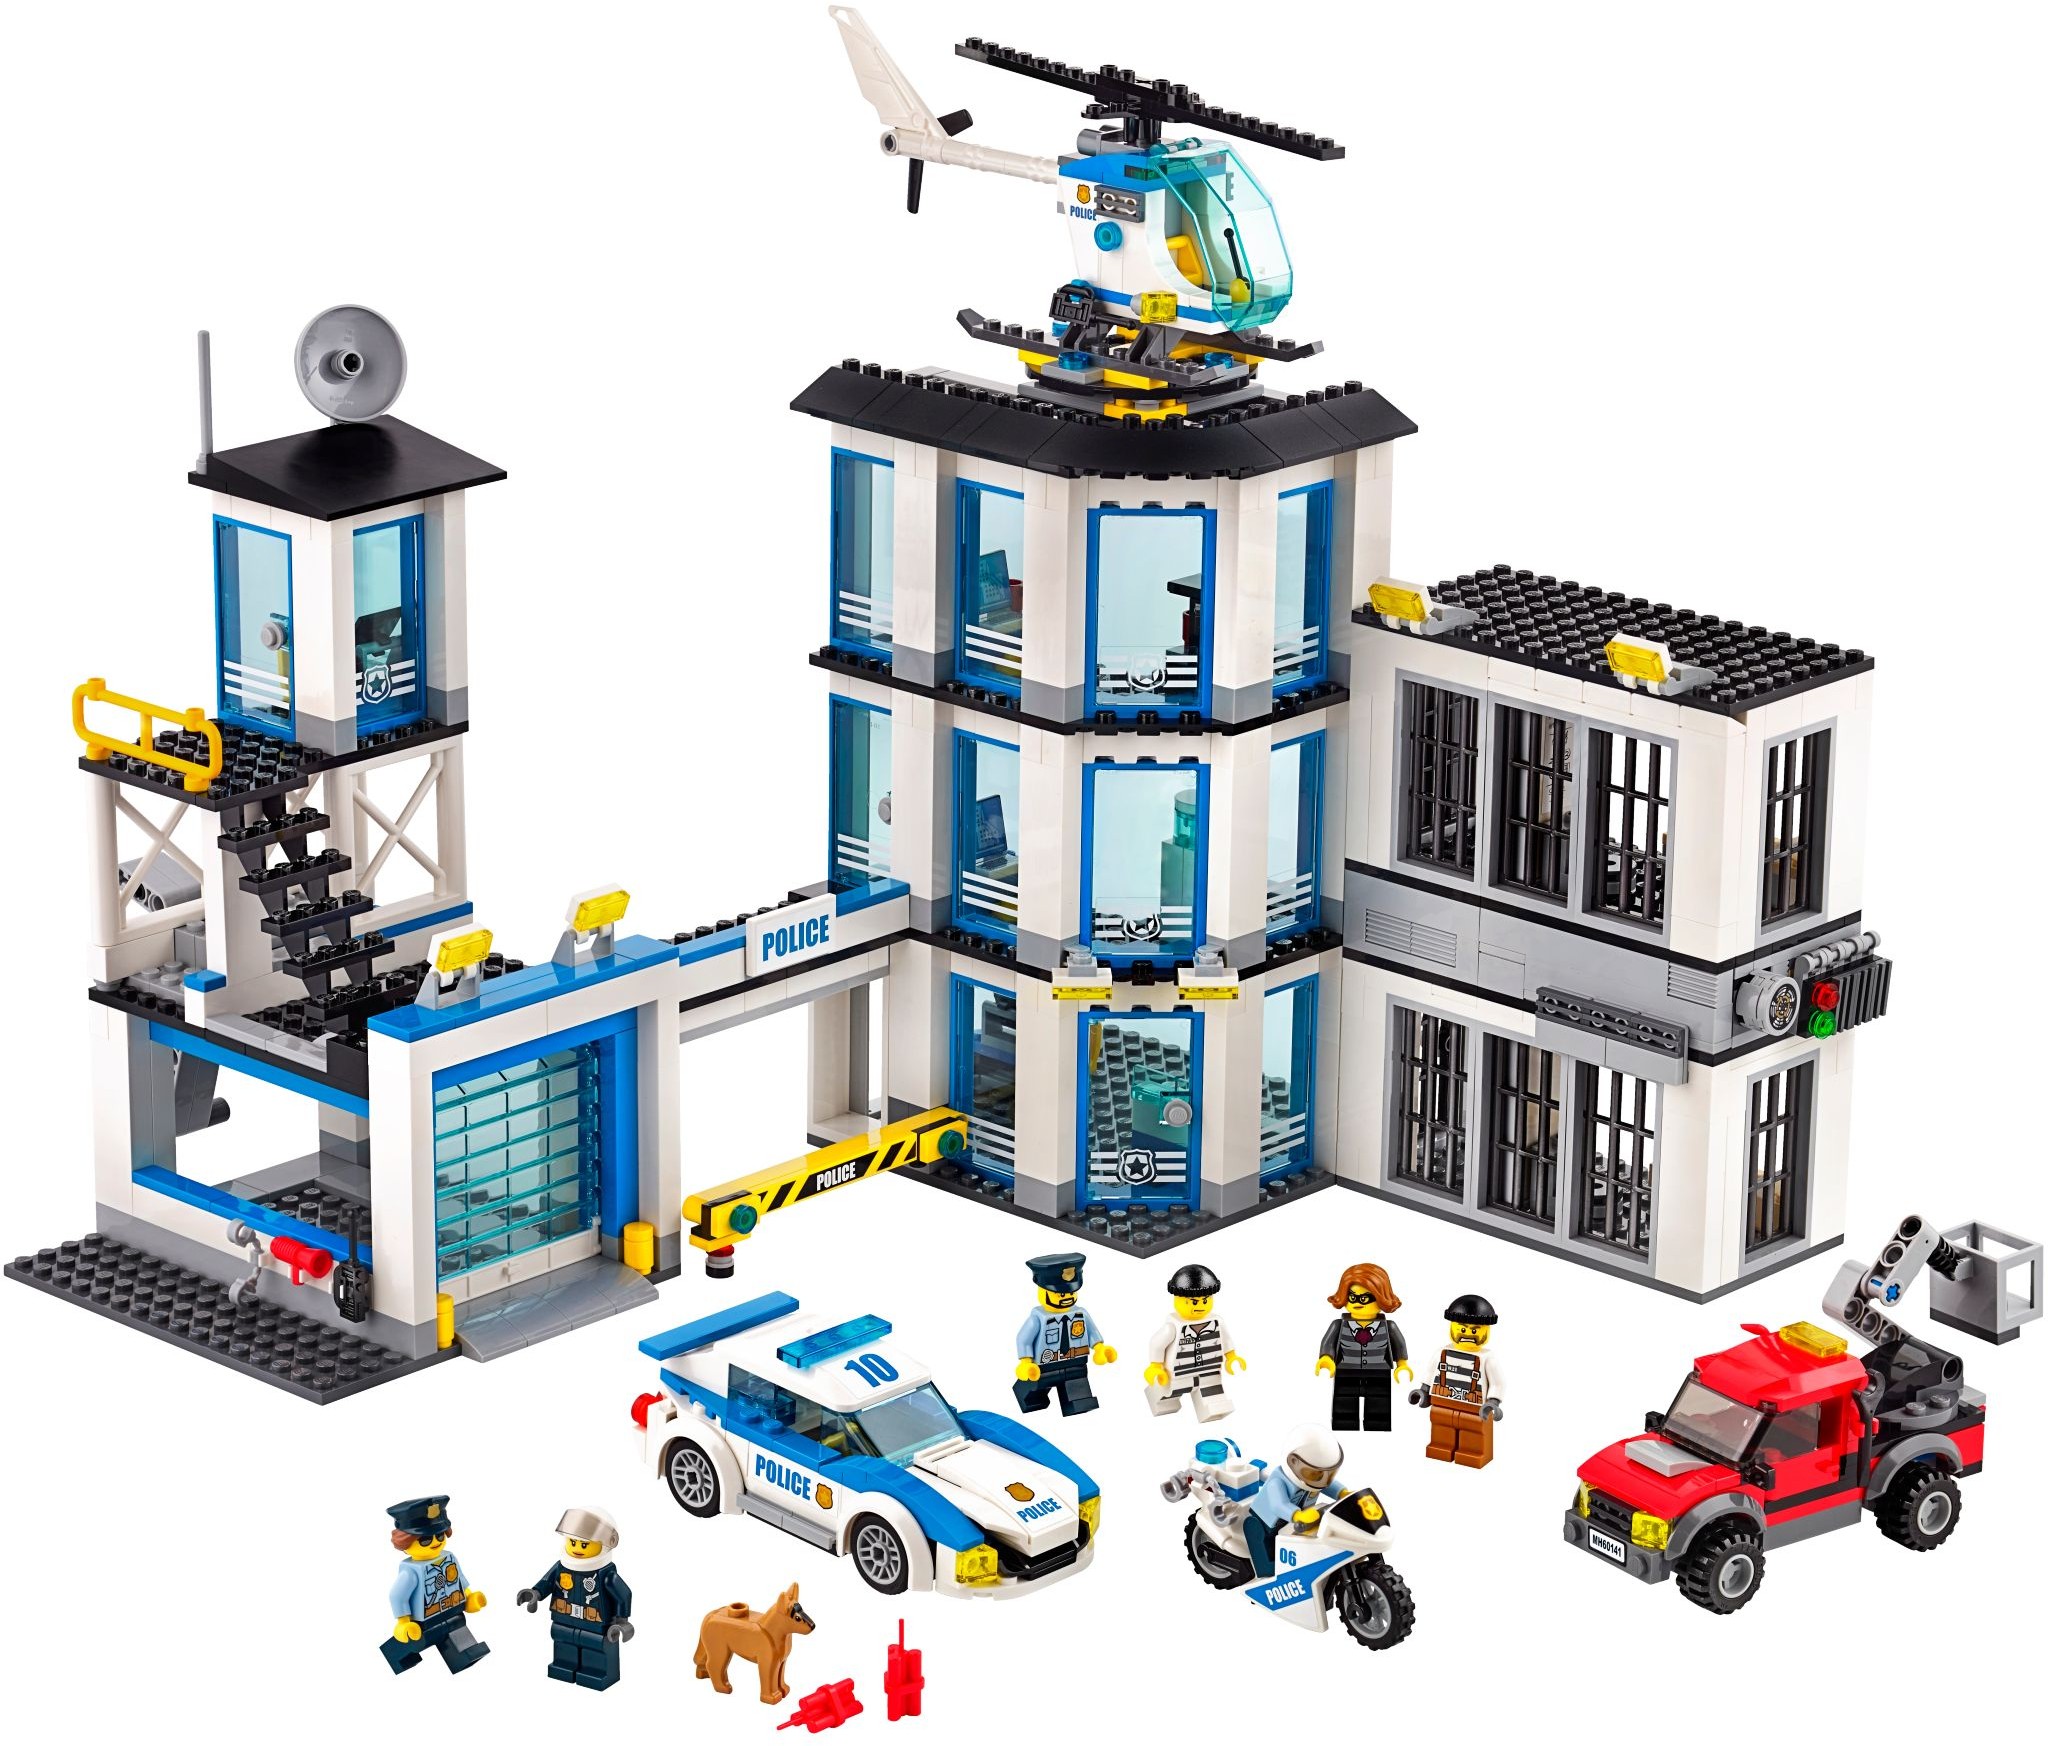 LEGO City 2017 Brickset